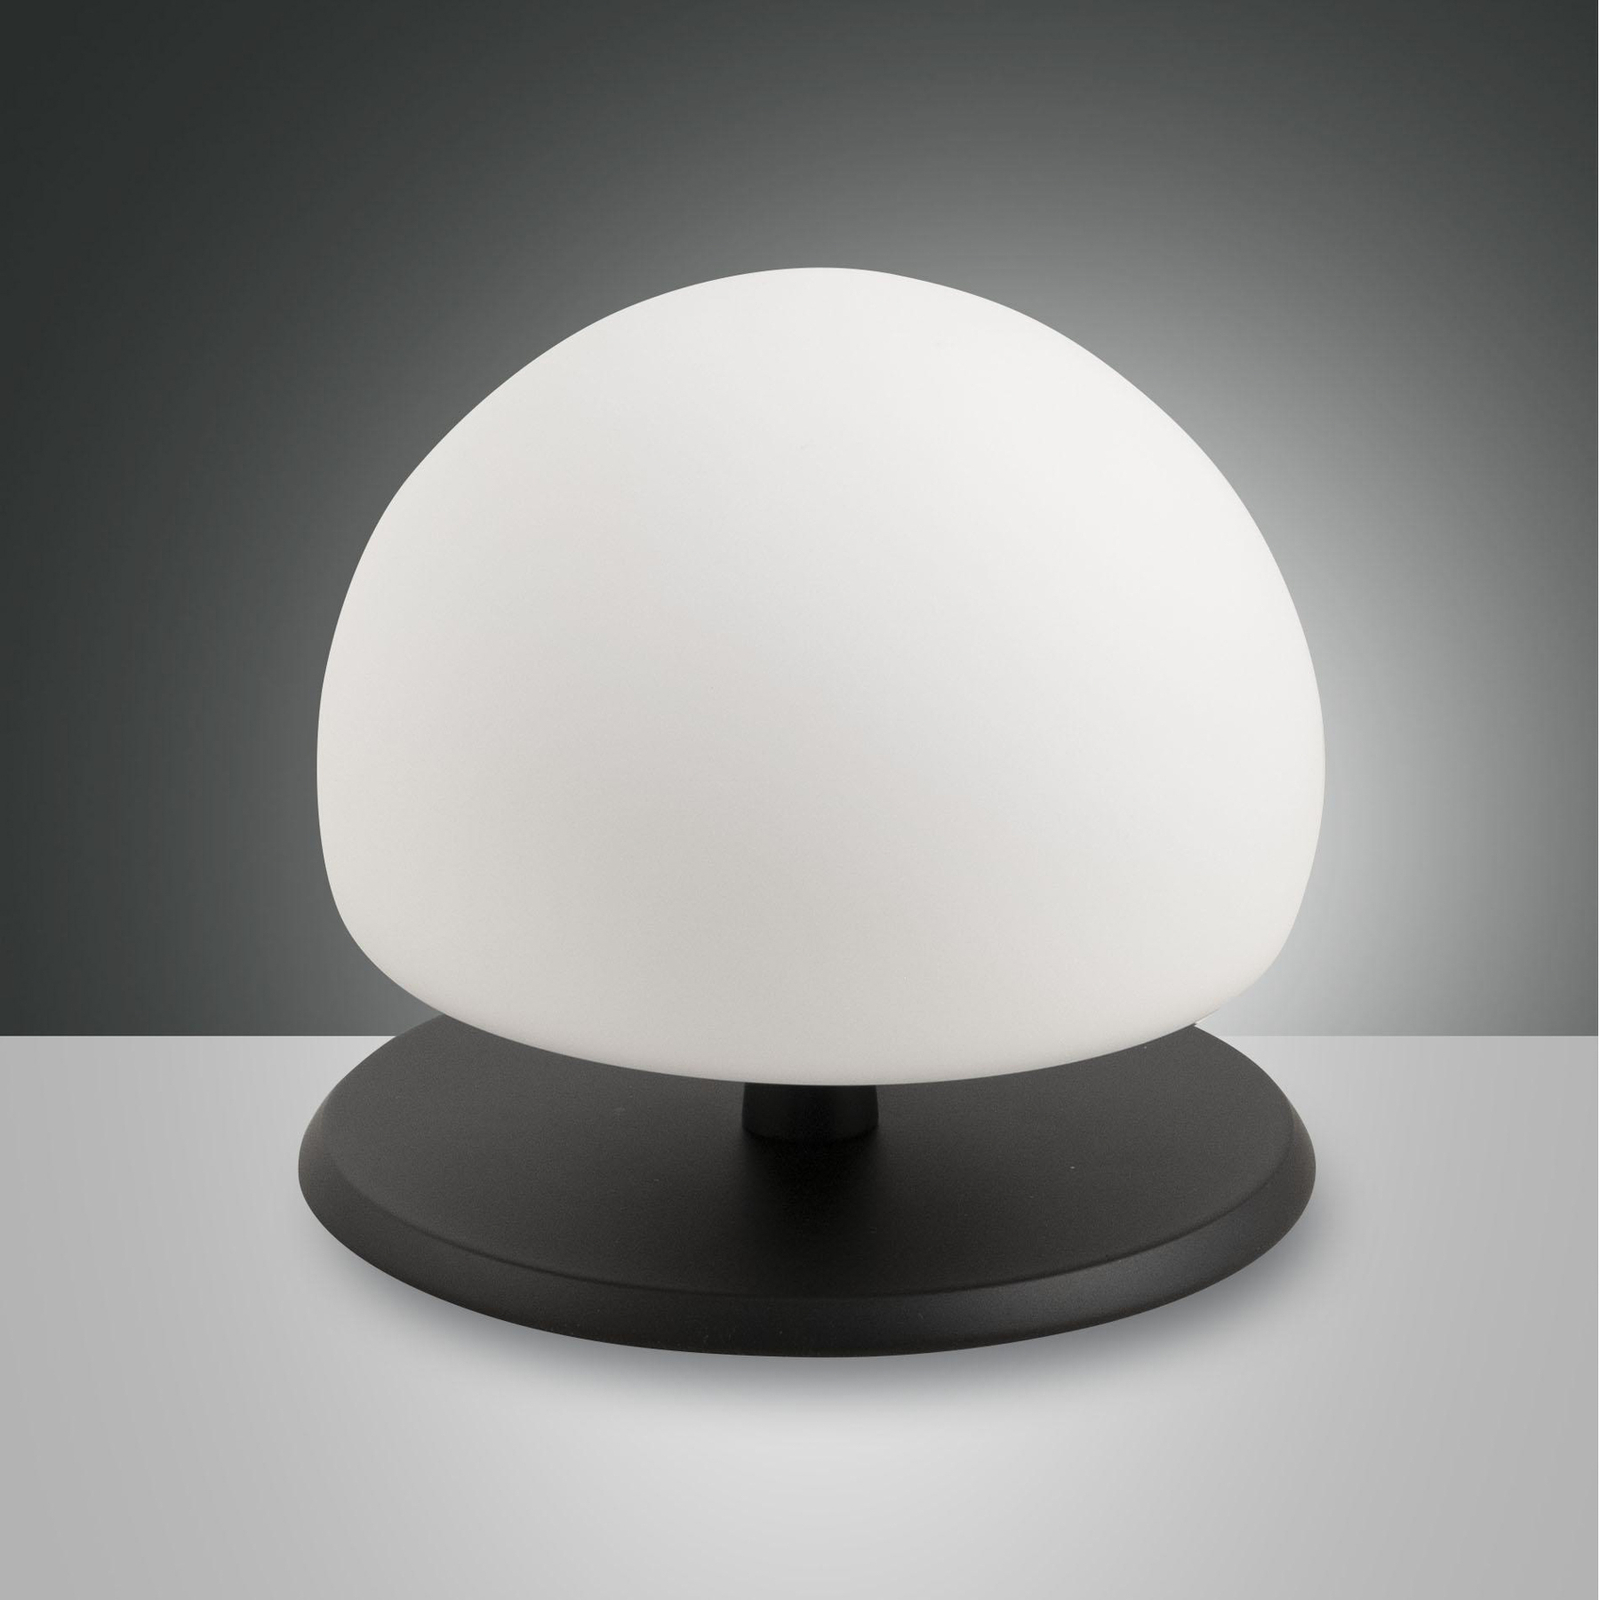 Morgana bordslampa, svart/vit, touchdimmer, 3.000 K